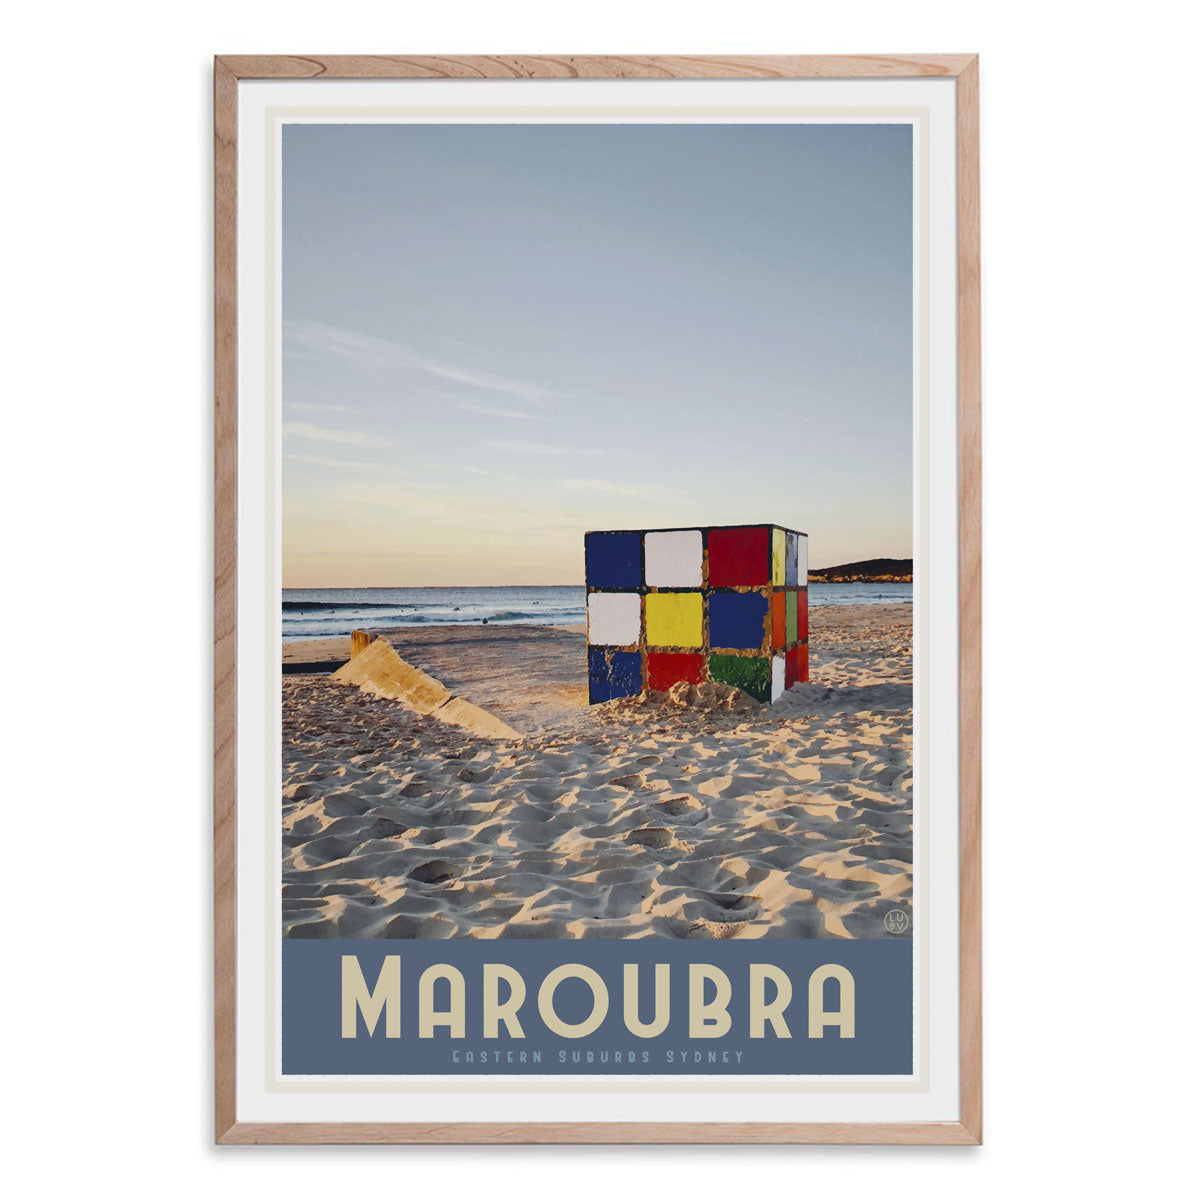 Maroubra cube vintage style oak framed travel print by places we luv